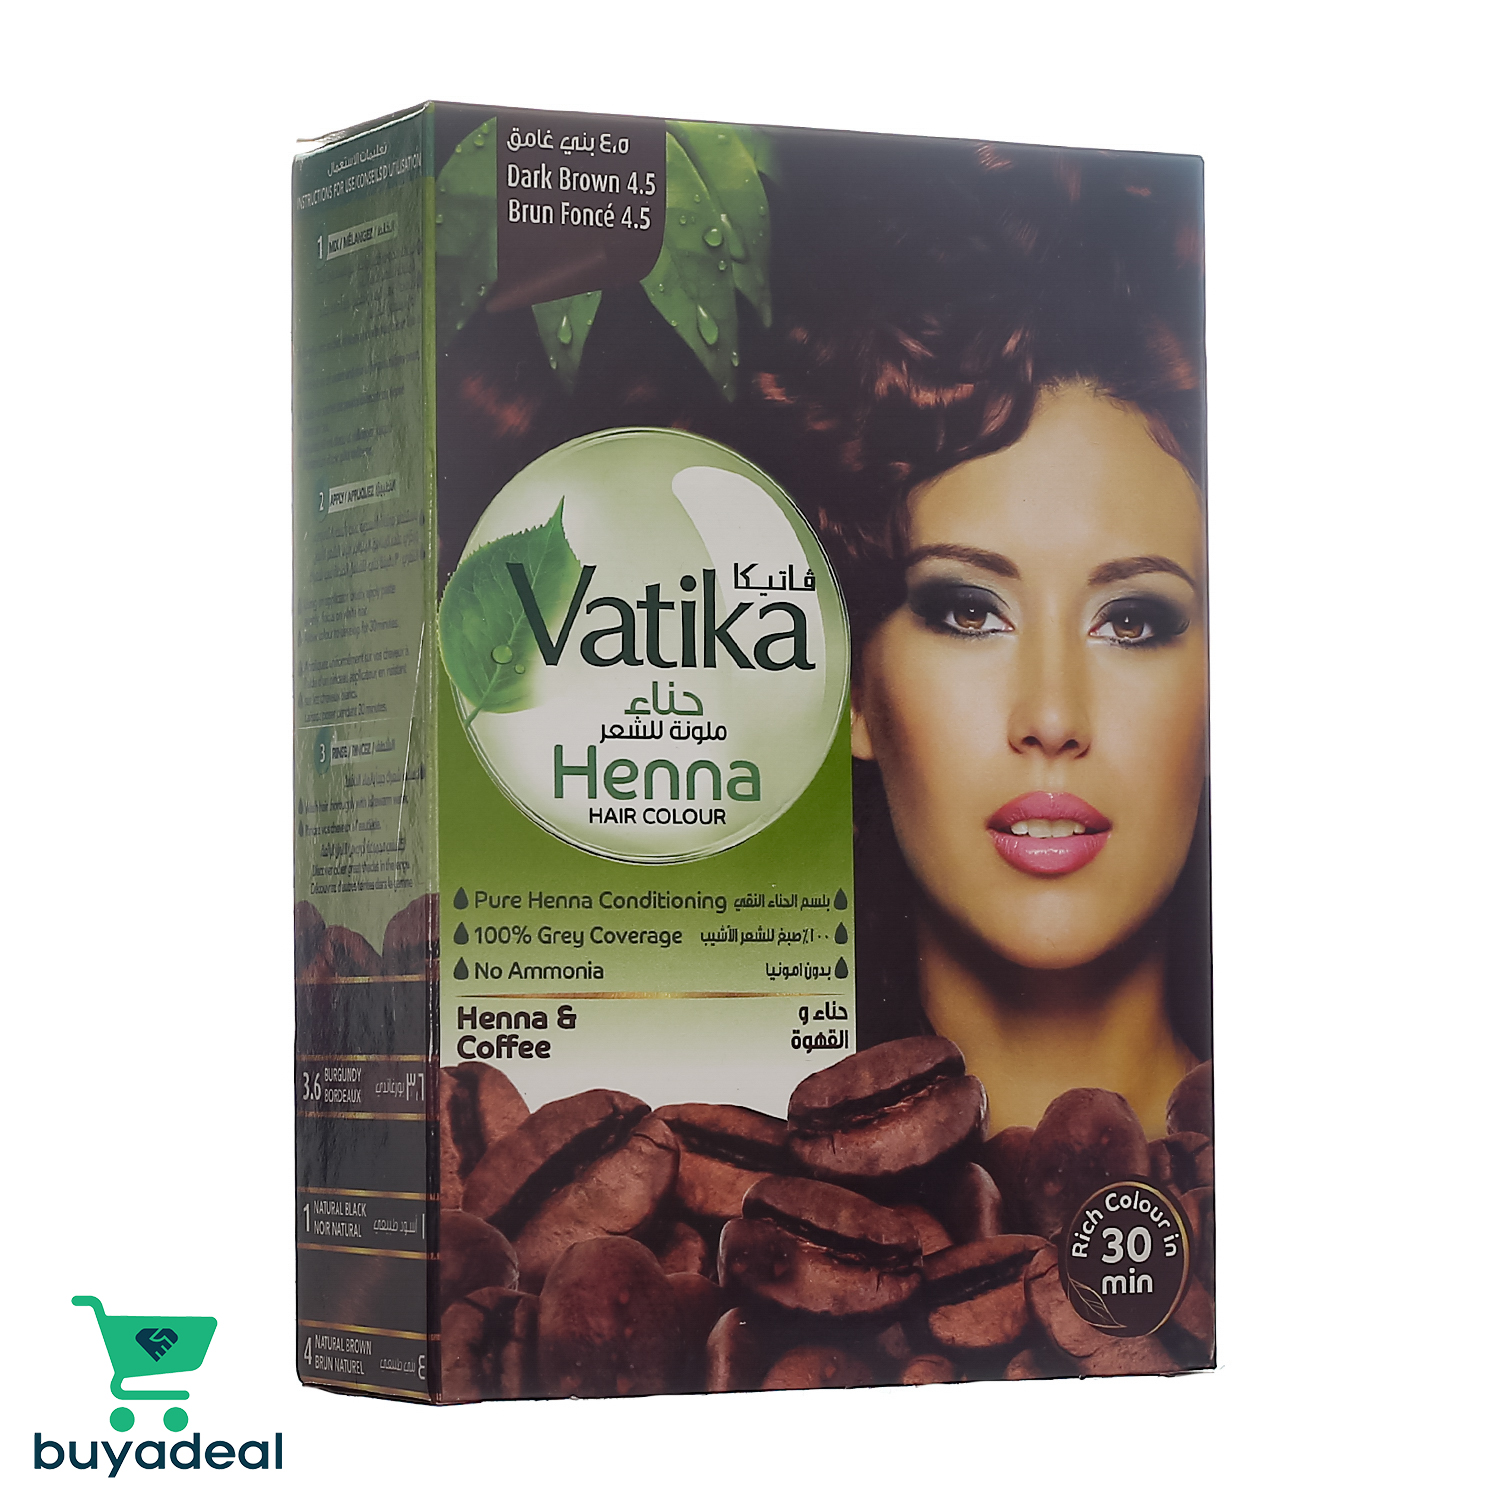 Buyadeal Product Dabur Vatika Henna Hair Color (Dark Brown) No 5- 60g